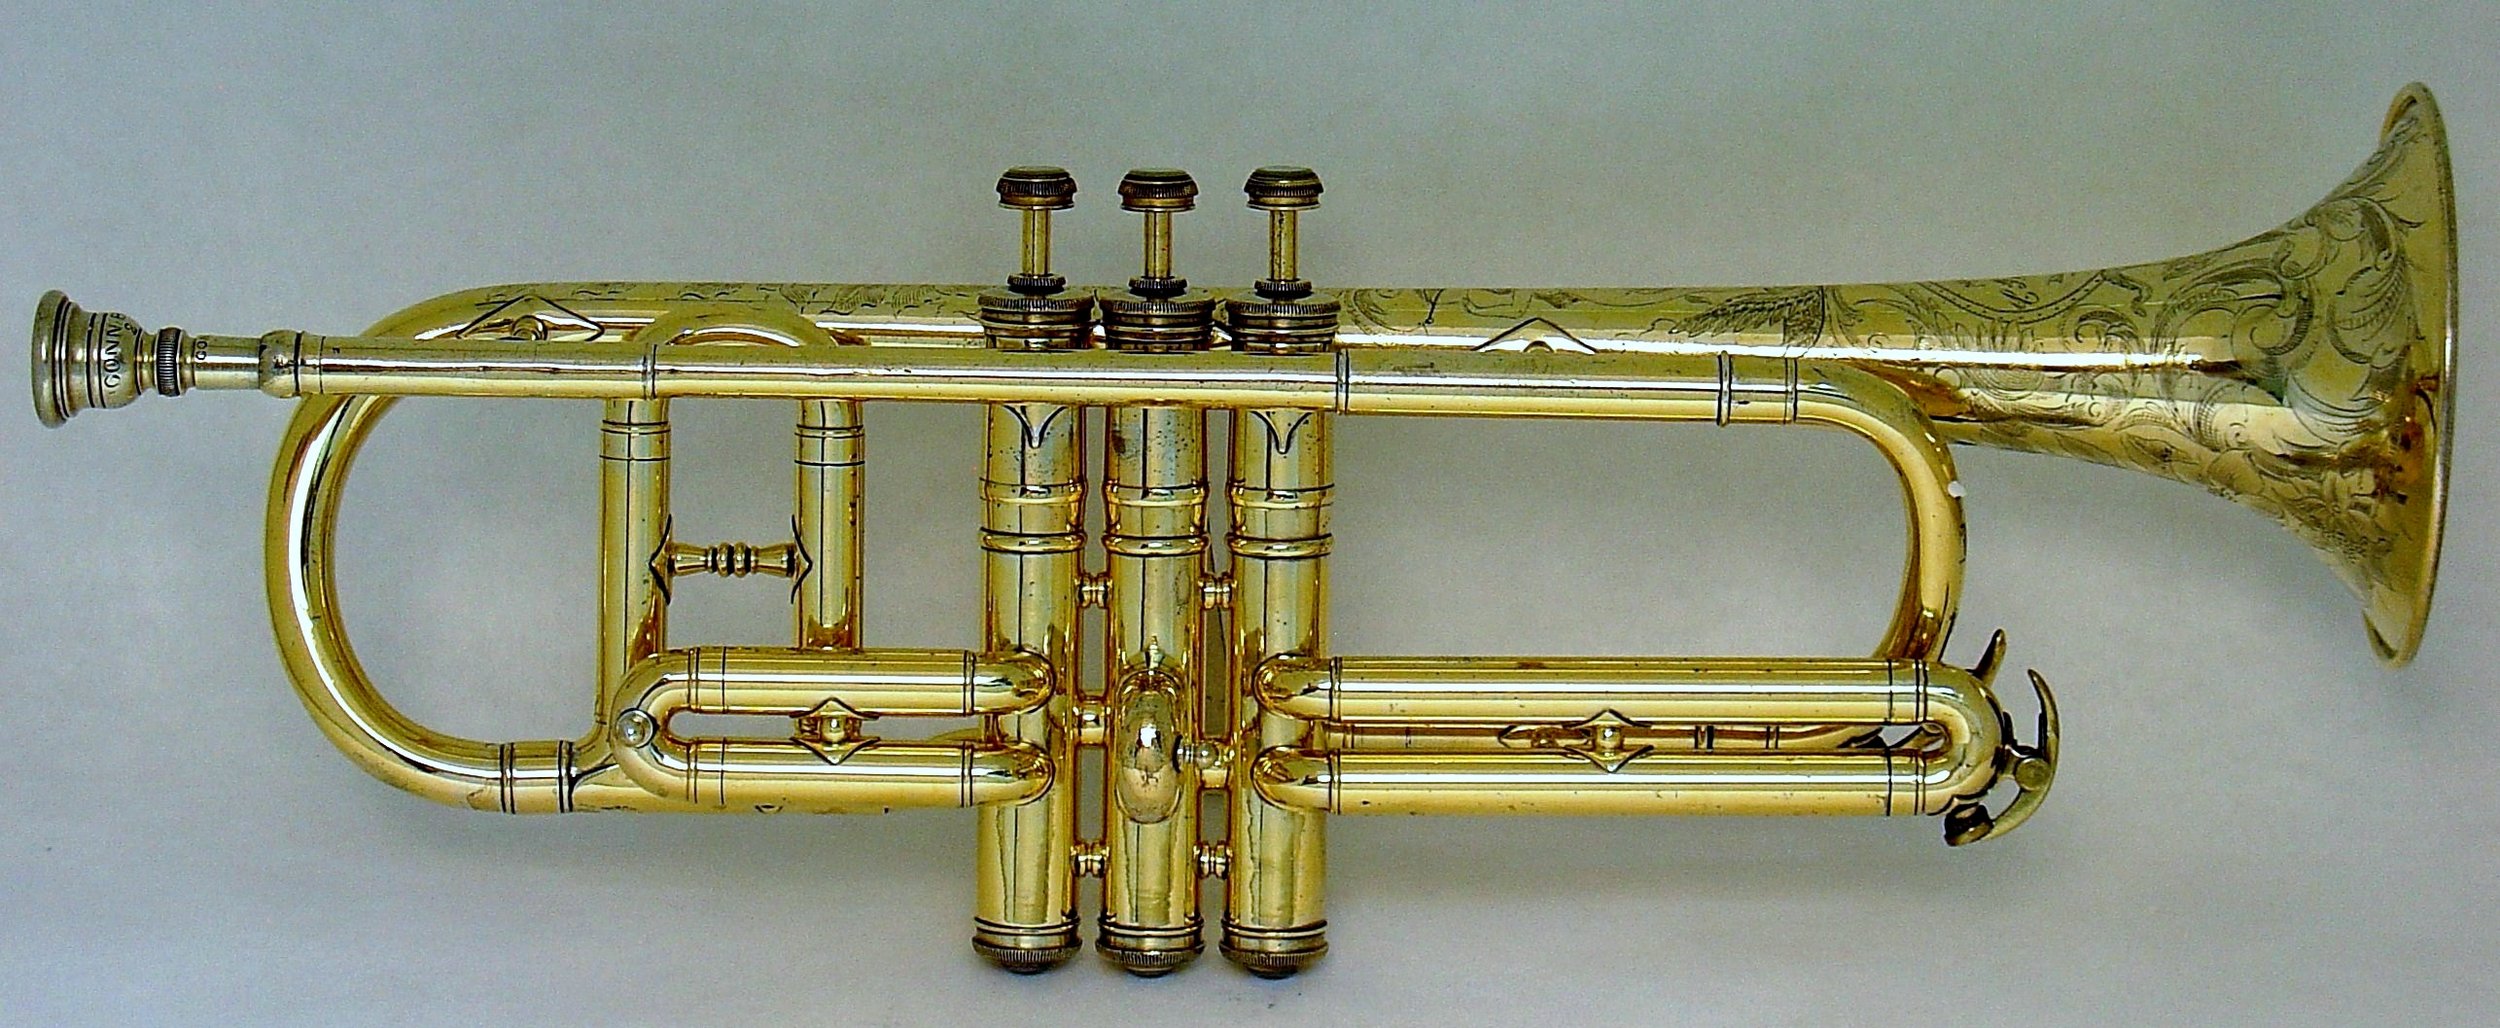 20th Century Trumpets and Cornets